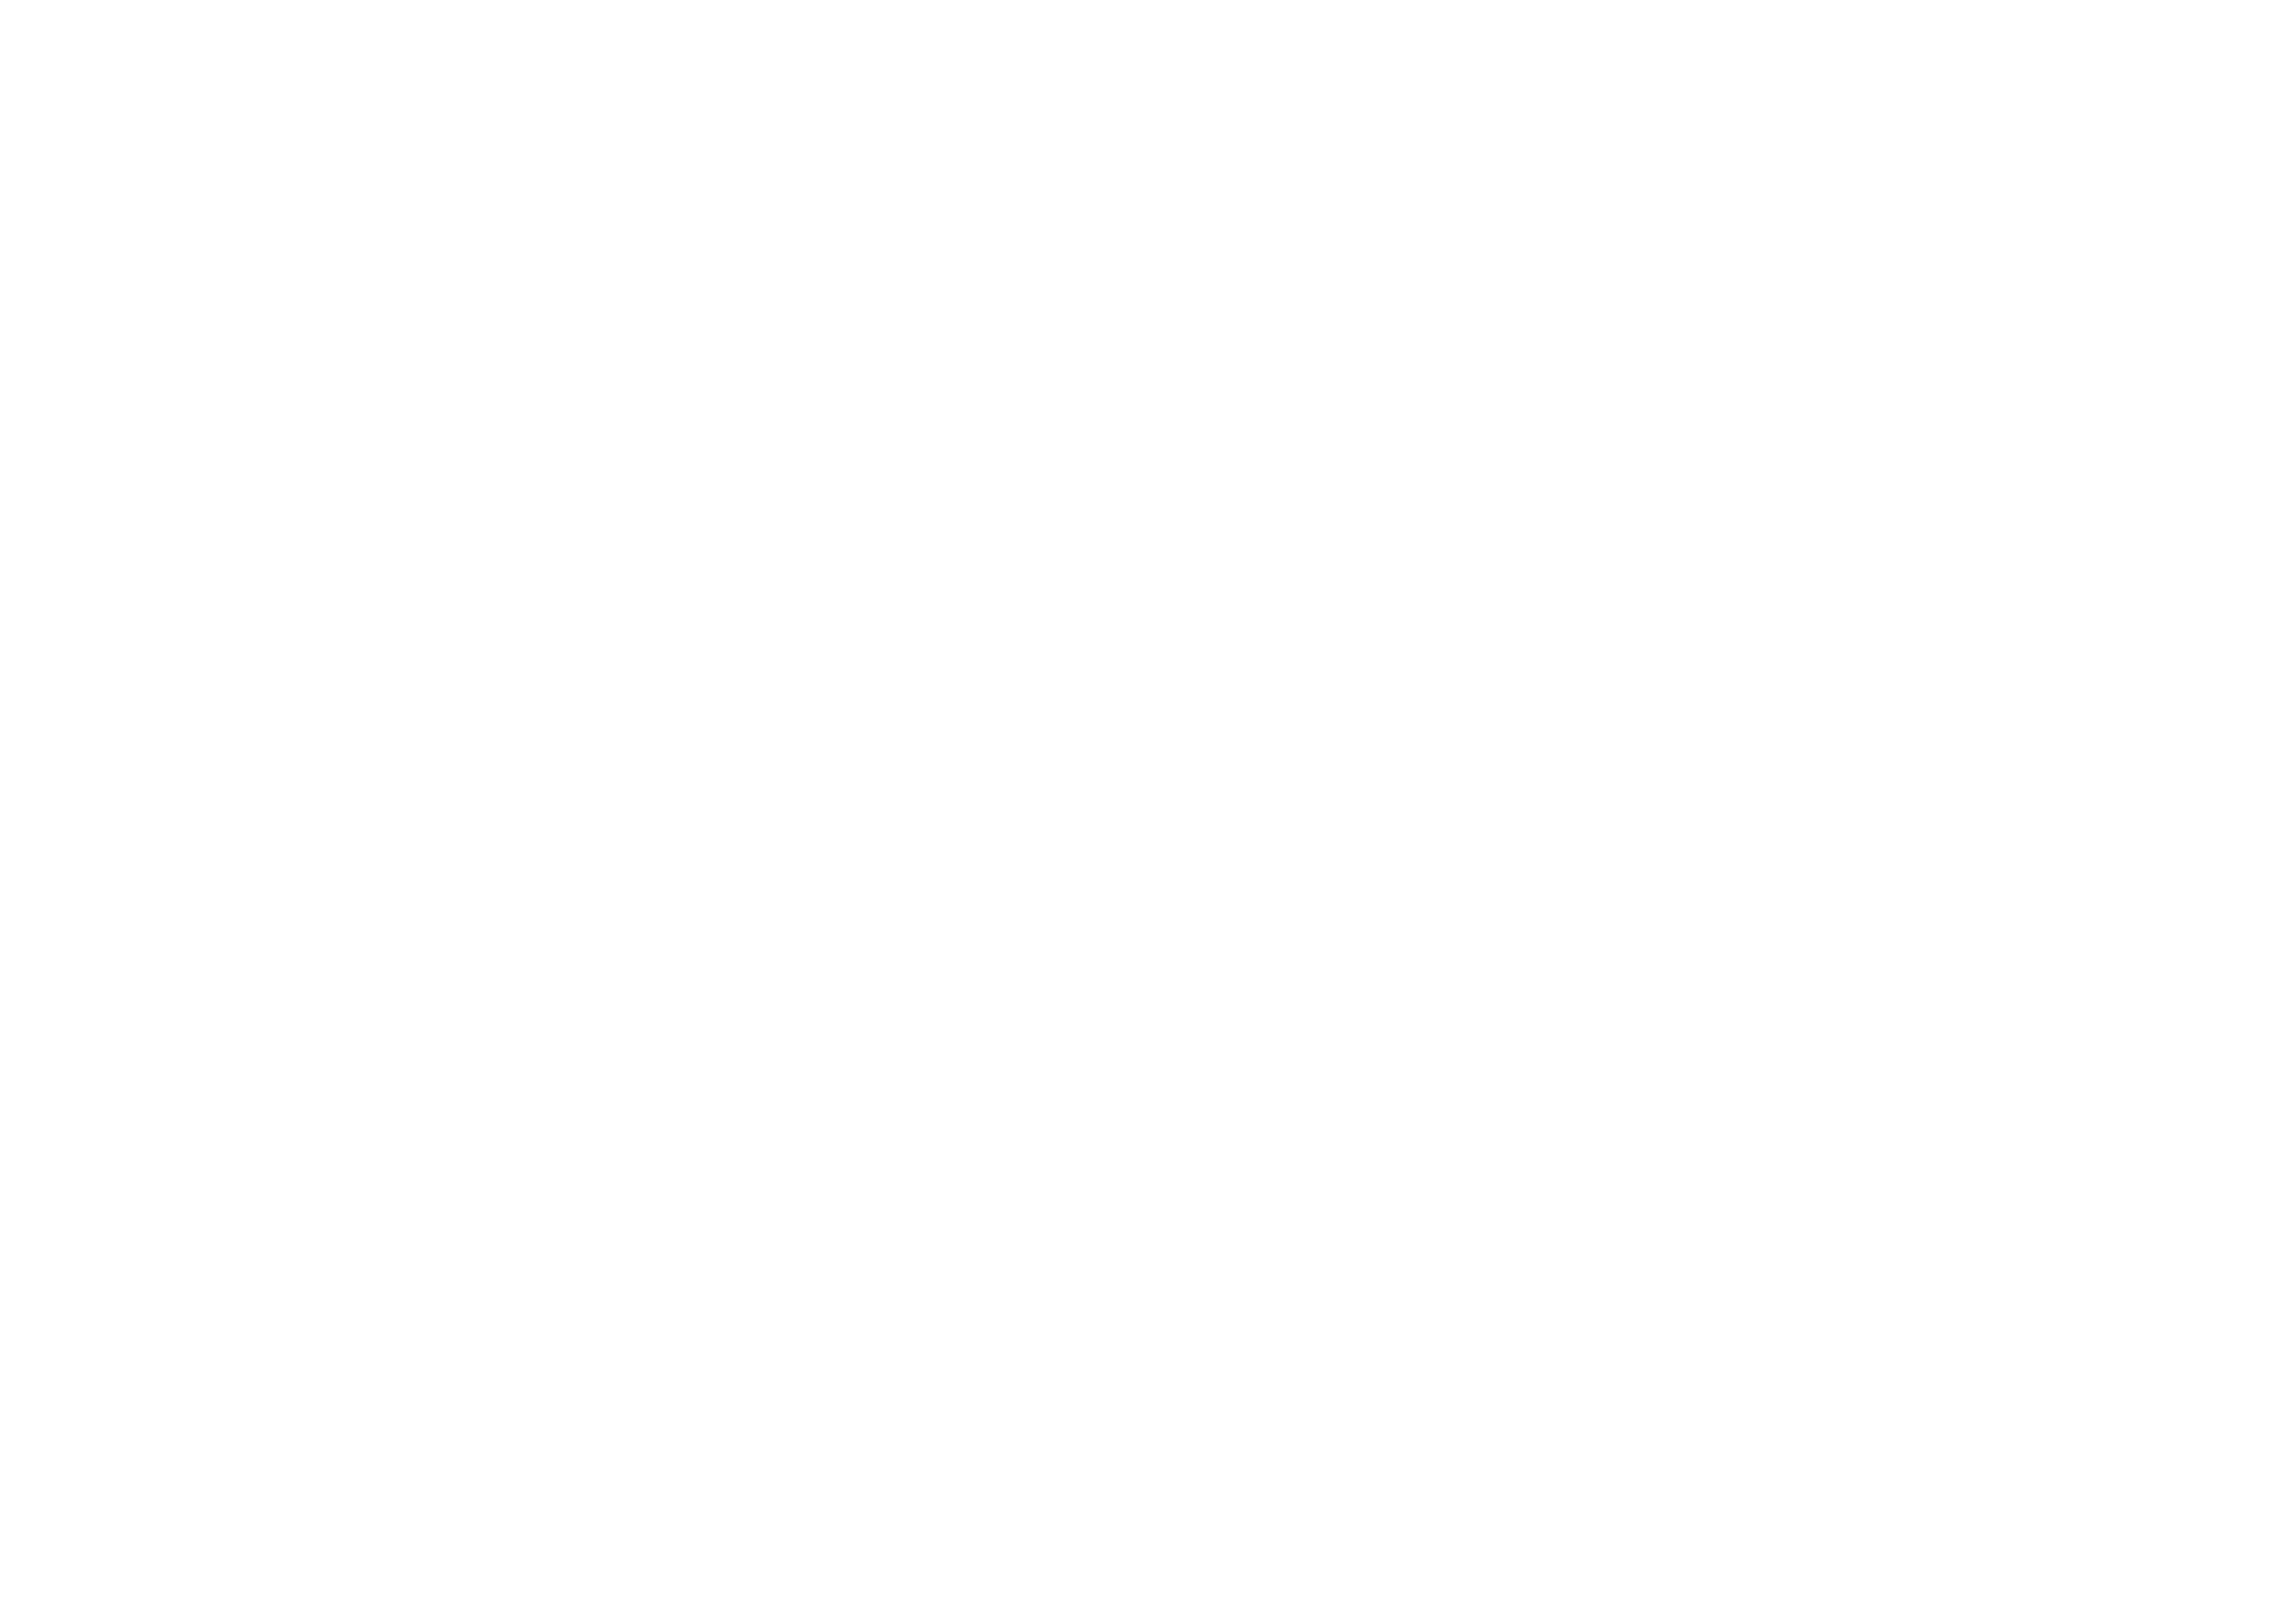 https://images.squarespace-cdn.com/content/v1/570412f4859fd05ddbfa6c69/1518653362703-JF1XGLGSX73XQWD2UQSY/boulder-sports-logo-01-01.png